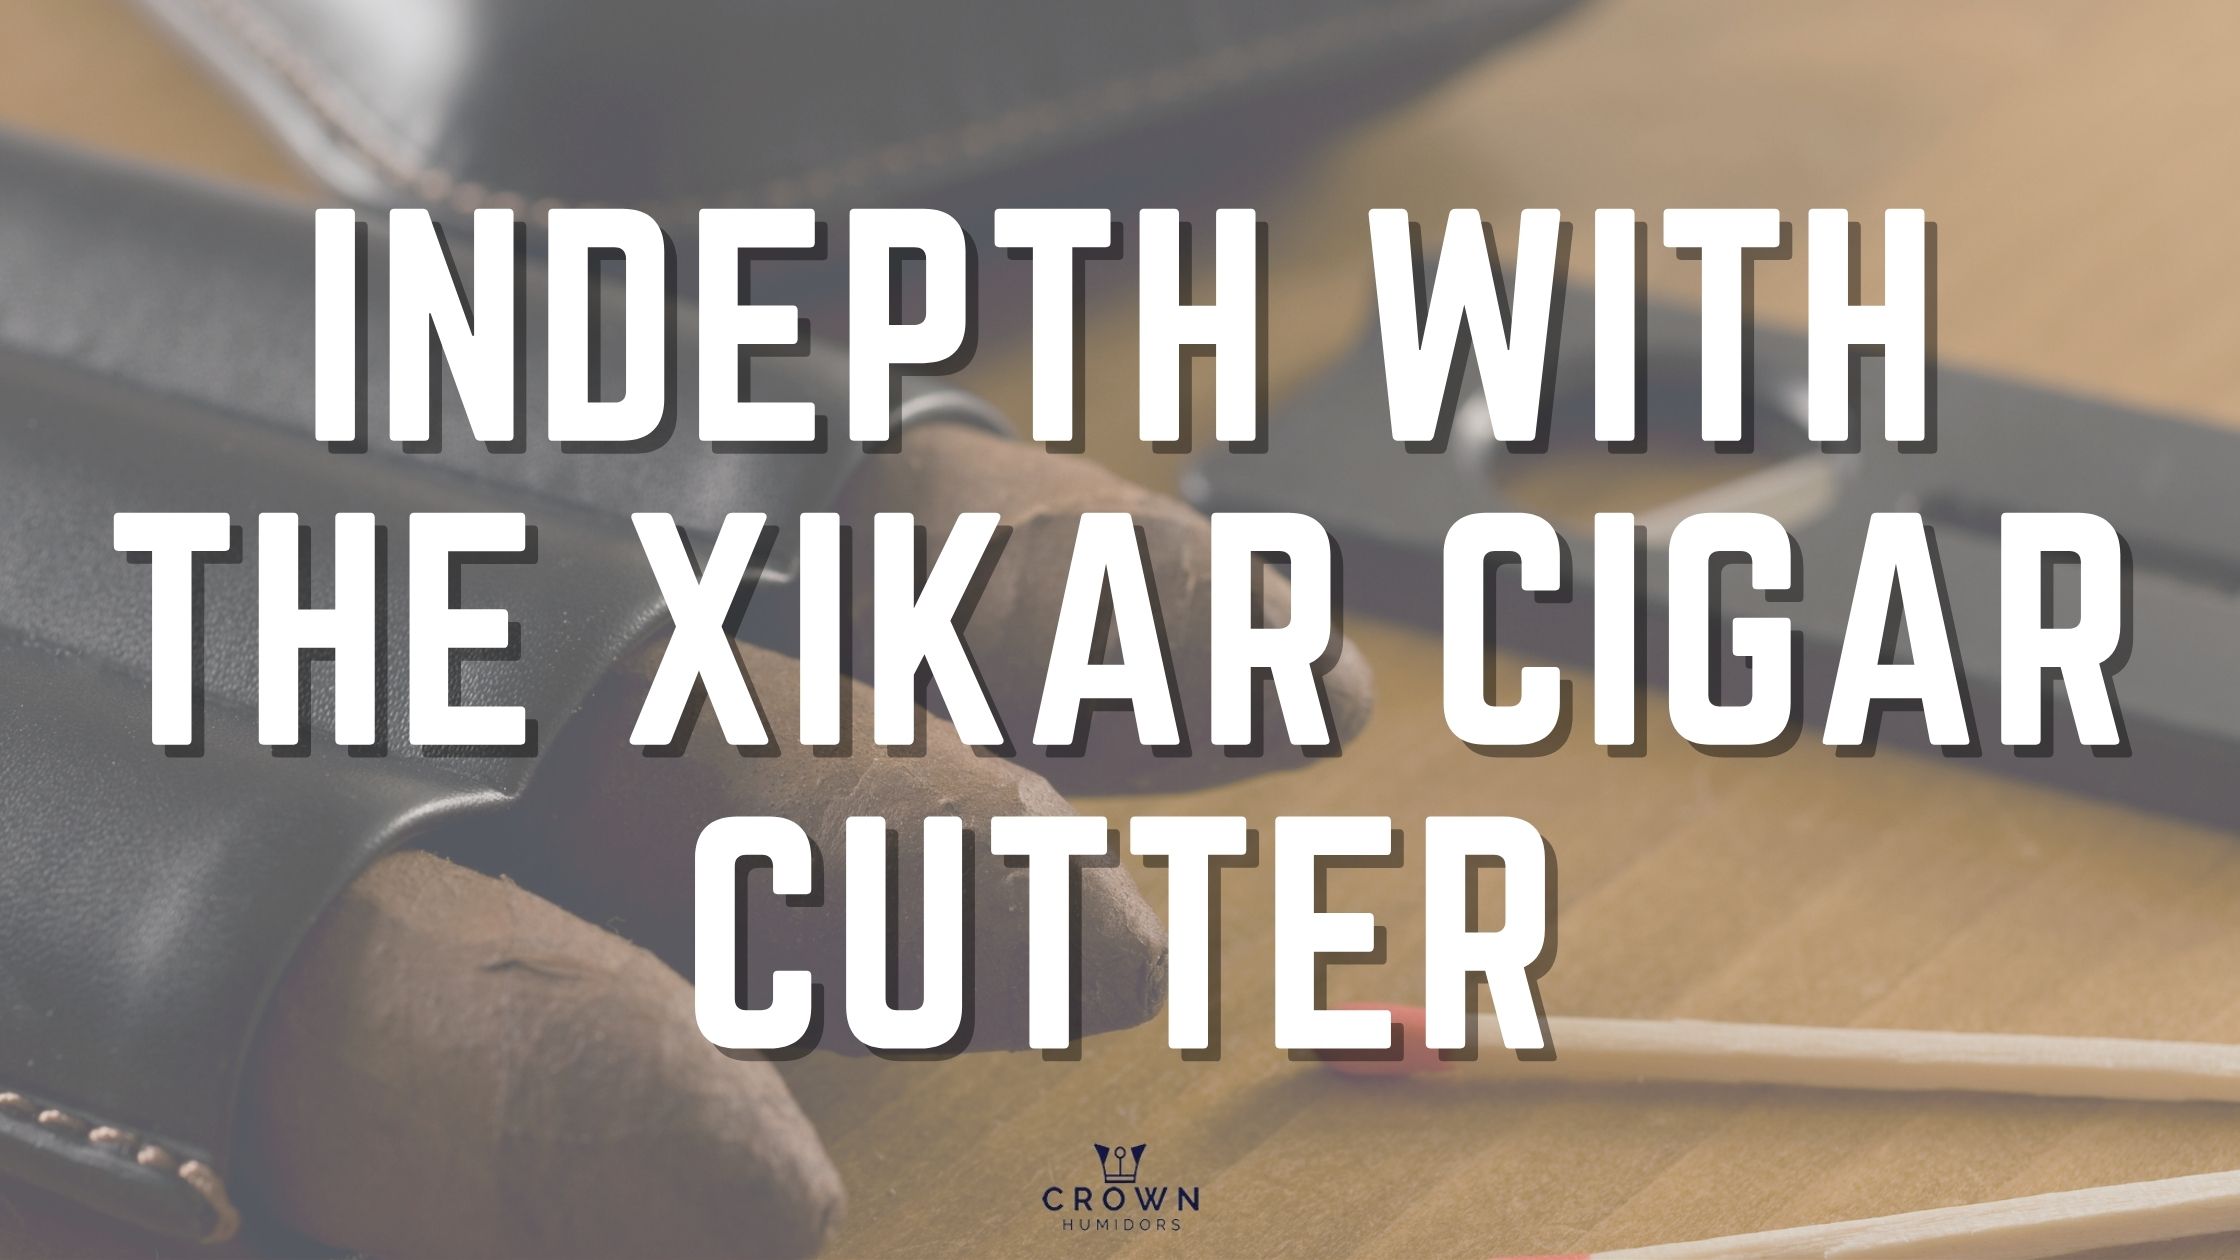 Indepth with the Xikar Cigar Cutter